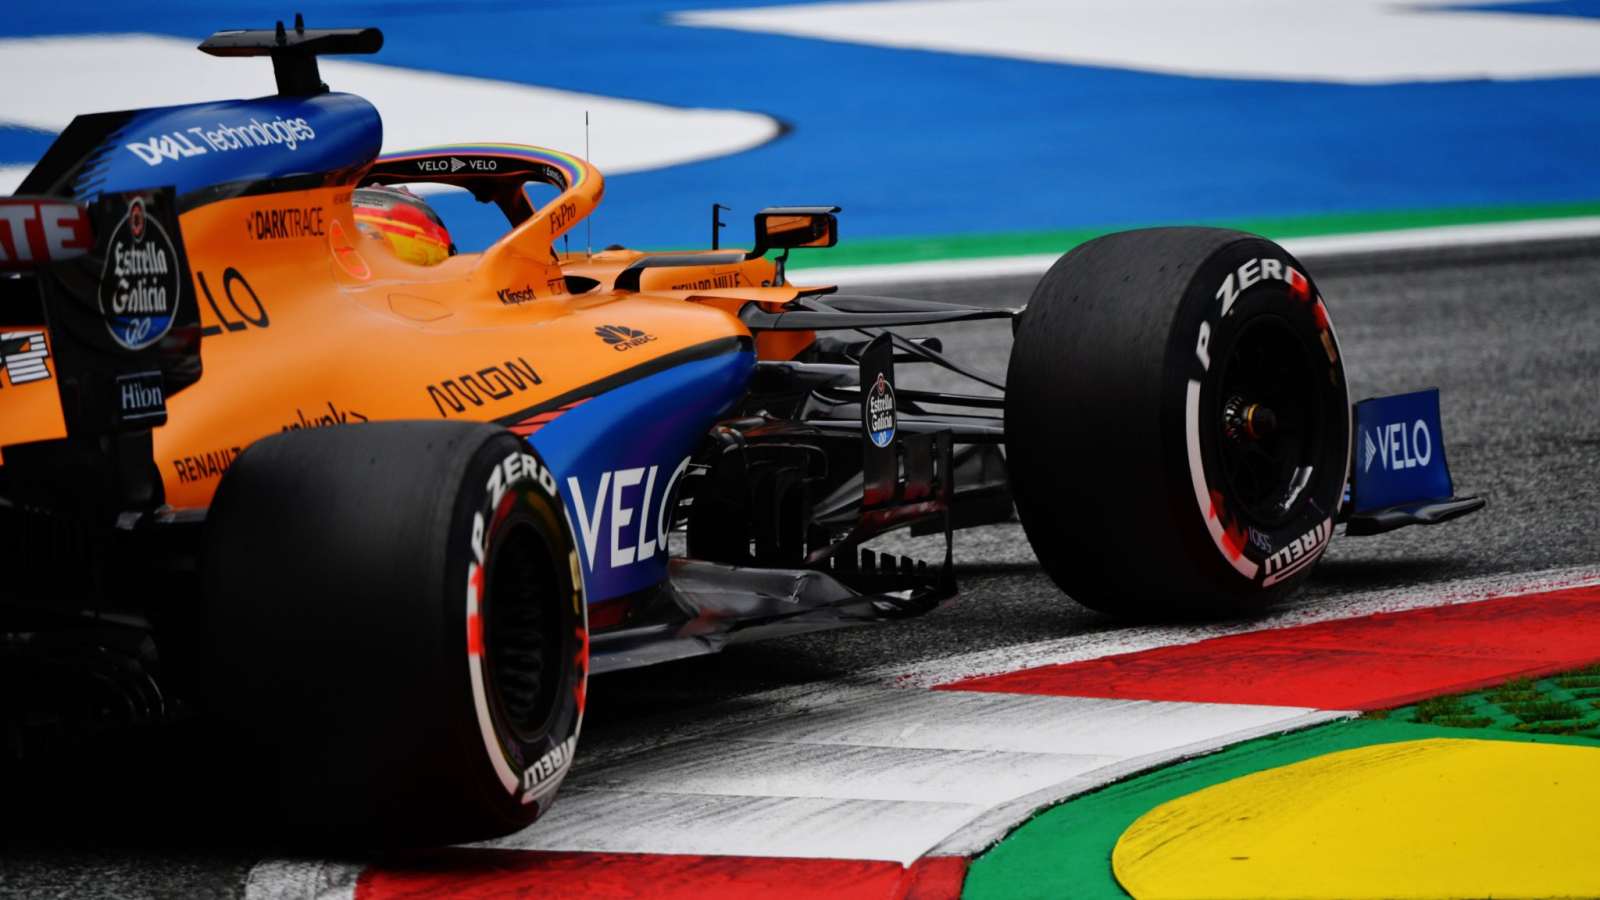 A McLaren conta com nova pintura no carro, utilizando campanha da F1 que apoia a diversidade